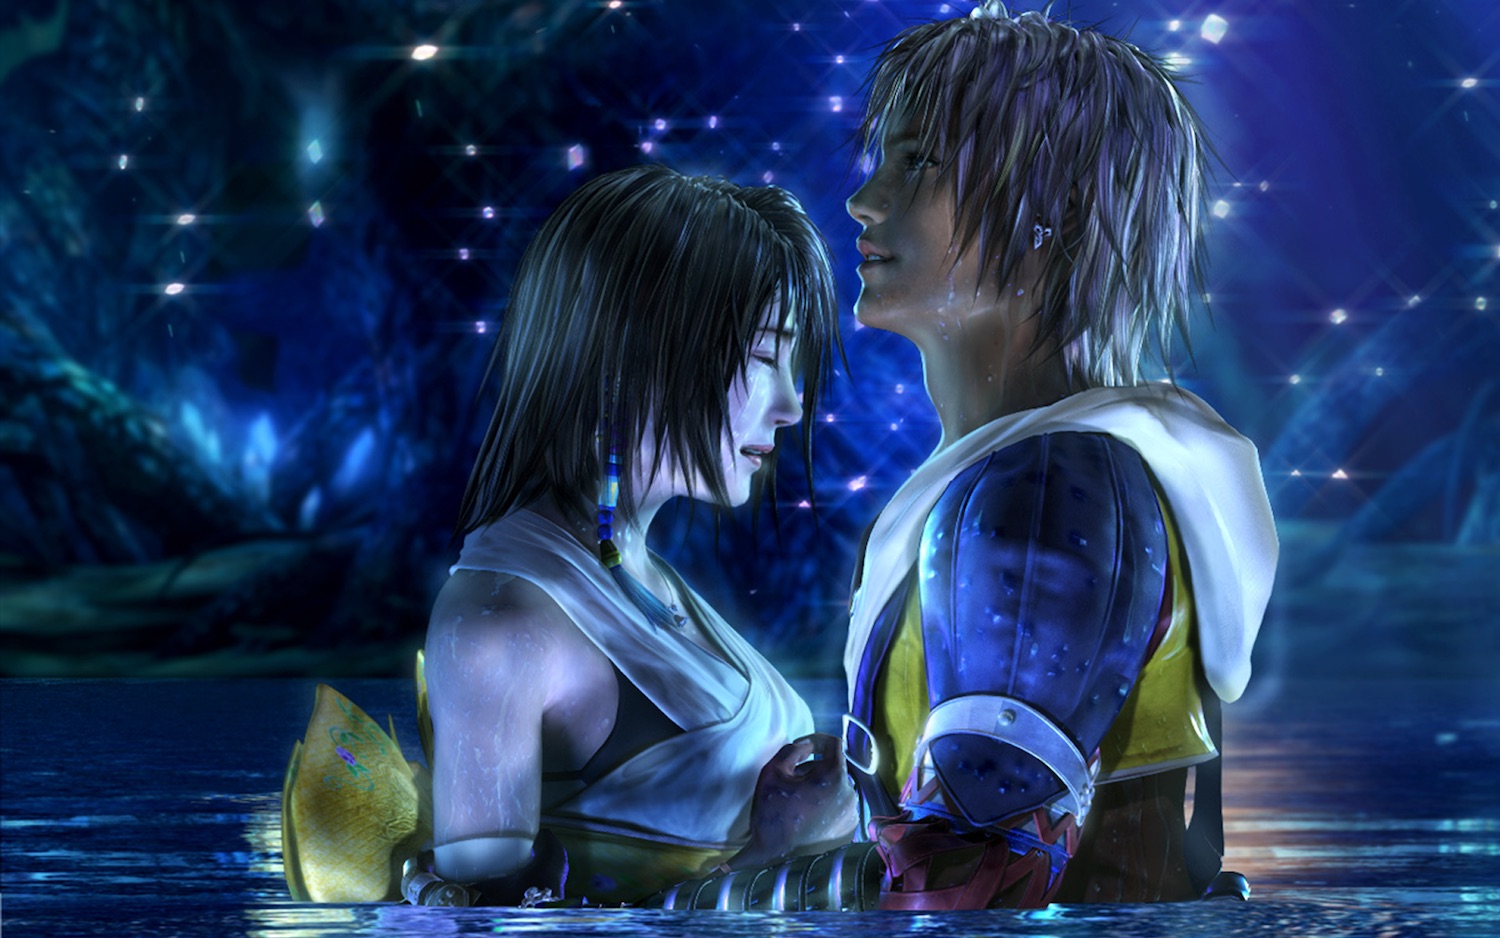 Final Fantasy X/X-2 HD Remaster Review - GameSpot